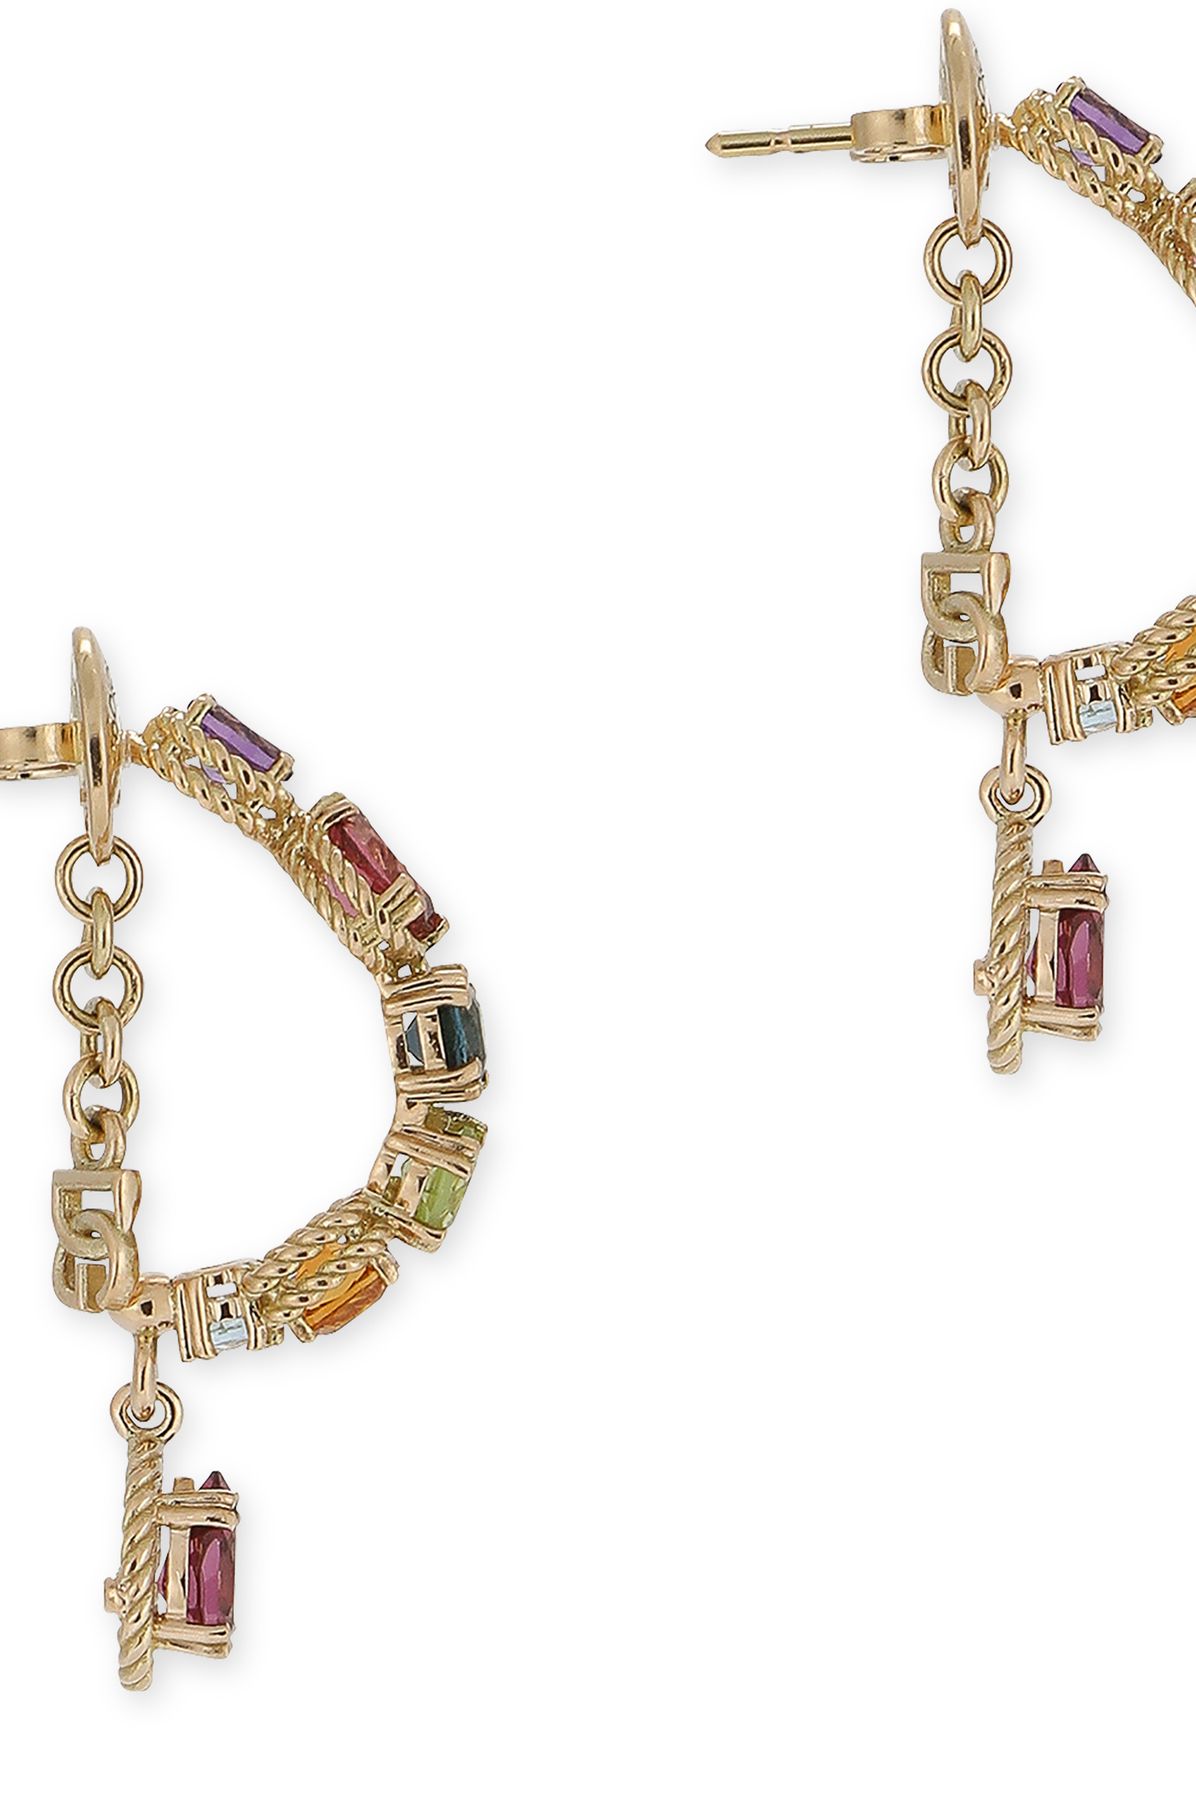 Dolce & Gabbana 18 kt yellow gold pierced earrings with multicolor fine gemstones